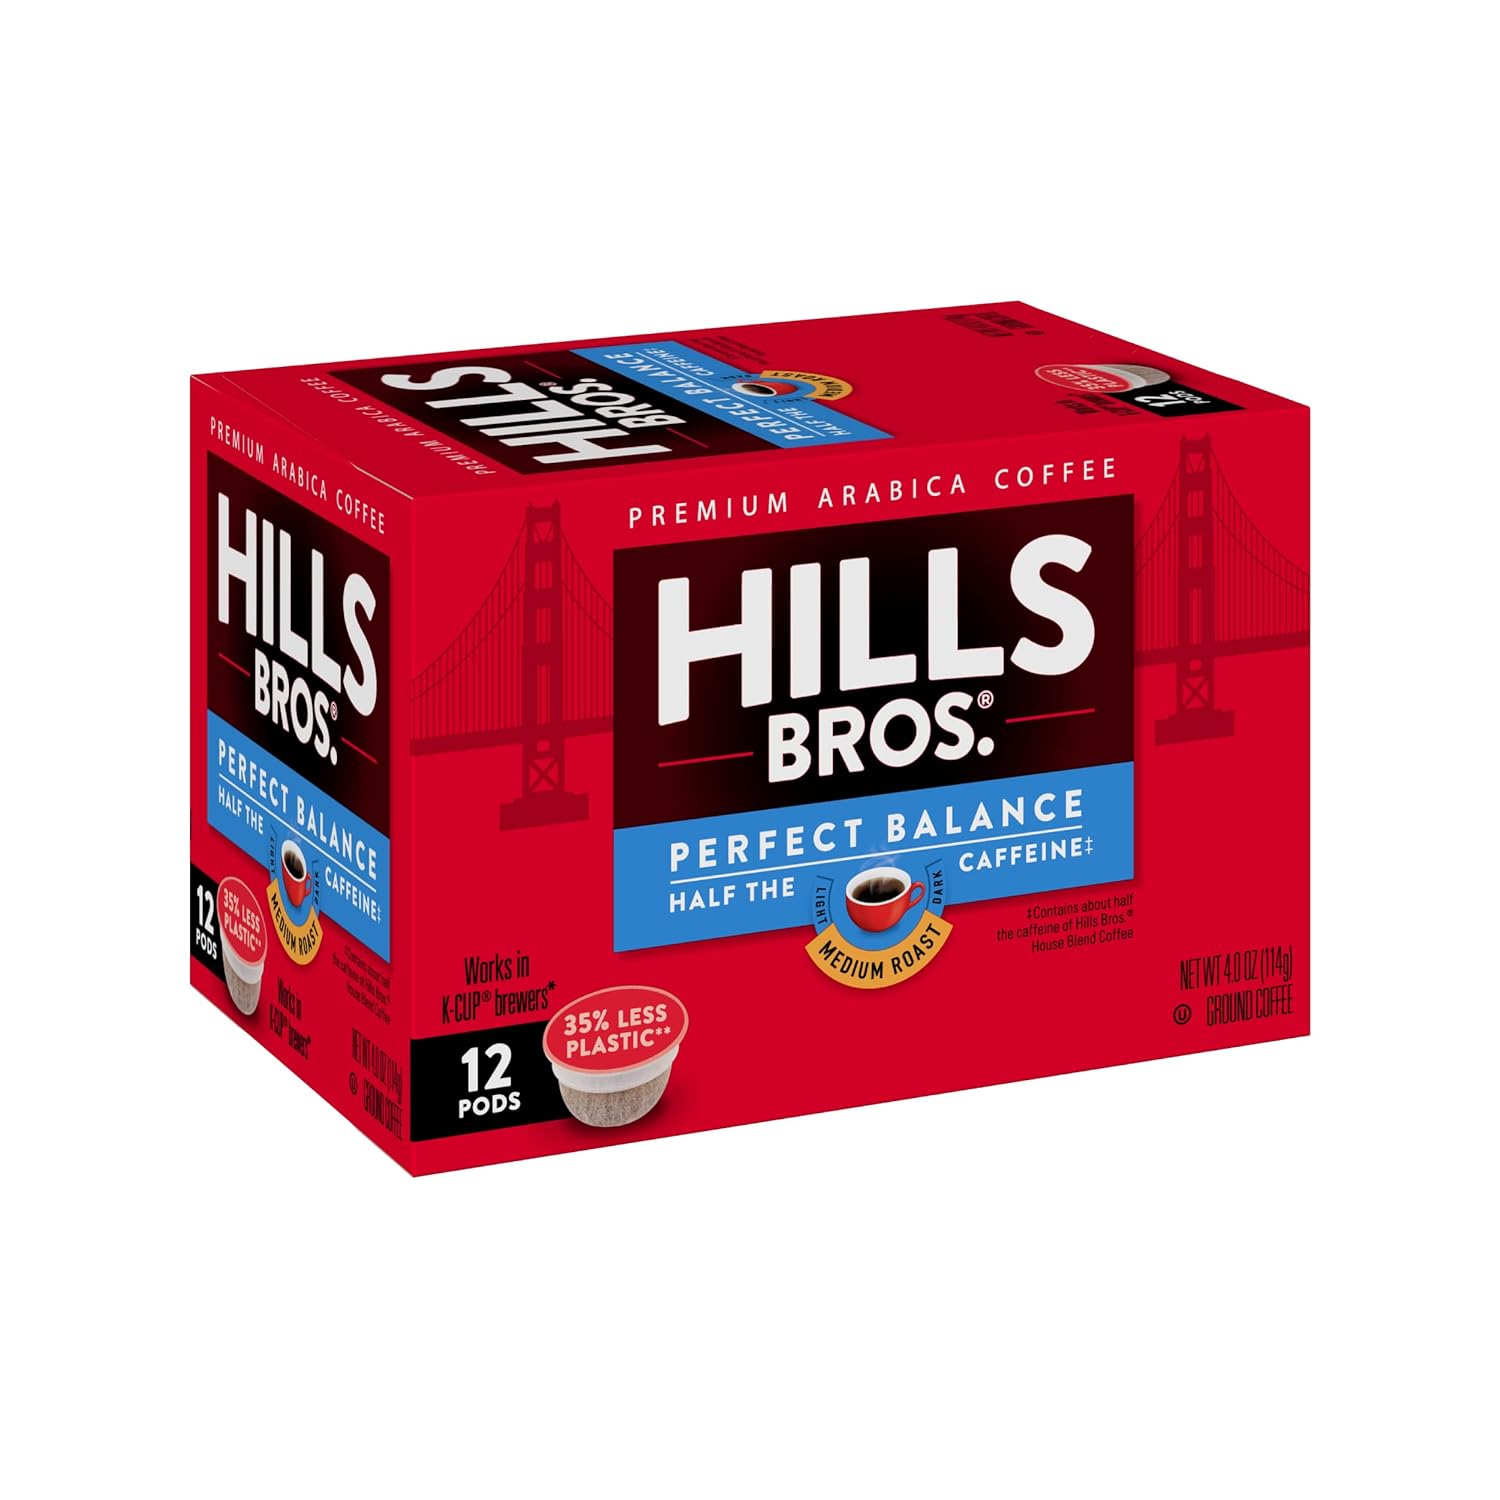 Hills Bros Single Serve Coffee Pods, Perfect Balance, Medium Roast Coffee, 12 Count-Keurig Compatible, Roasted Arabica Coffee Beans, Less Caffeine, Full-Body Flavor